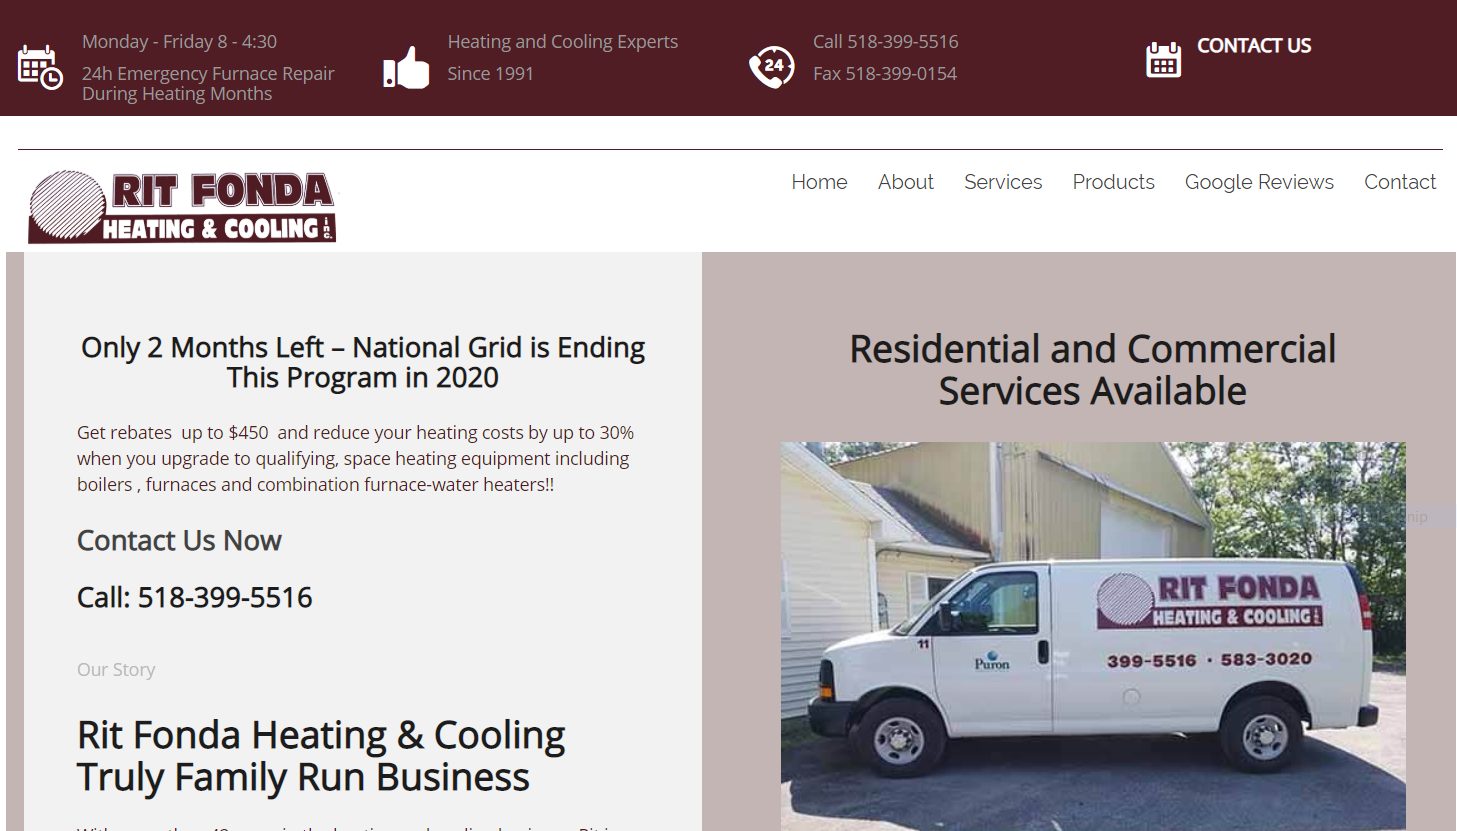 Rit Fonda Heating & Cooling website screen shot